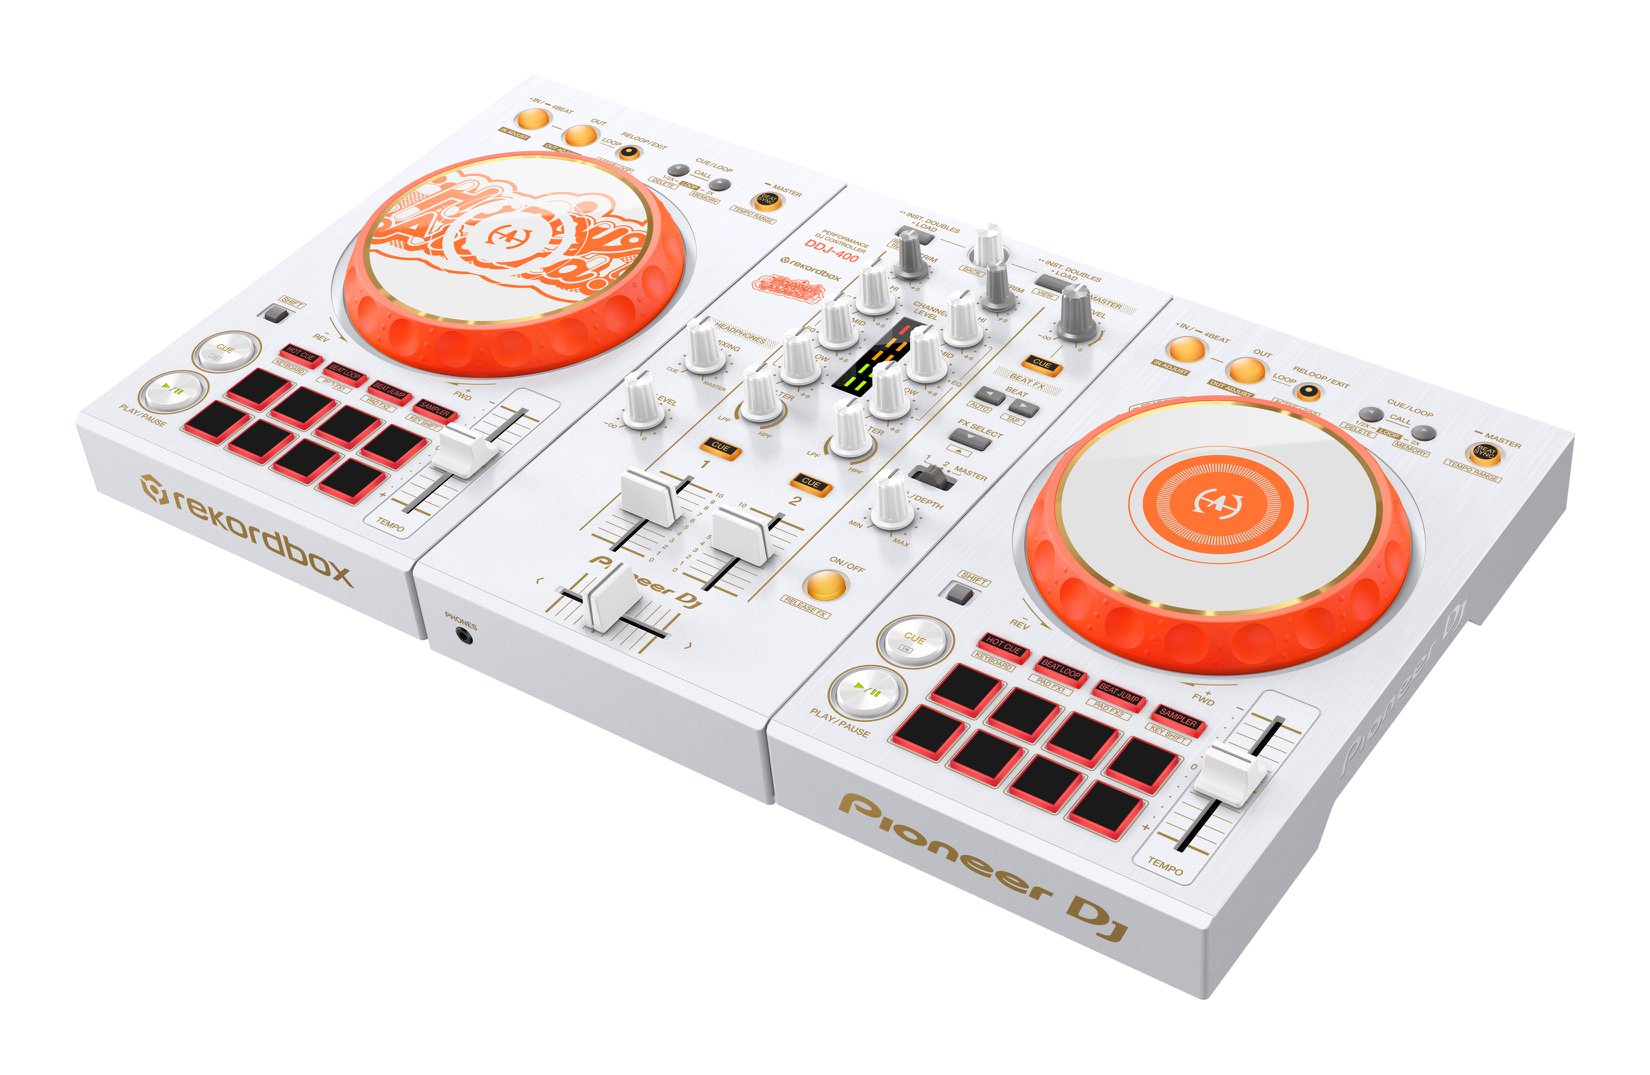 Dj контроллер pioneer 400 купить. Контроллер DDJ 400. DJ-контроллер Pioneer 4000. DDJ flx6 White. Pioneer DJ контроллер 400 разъемы.